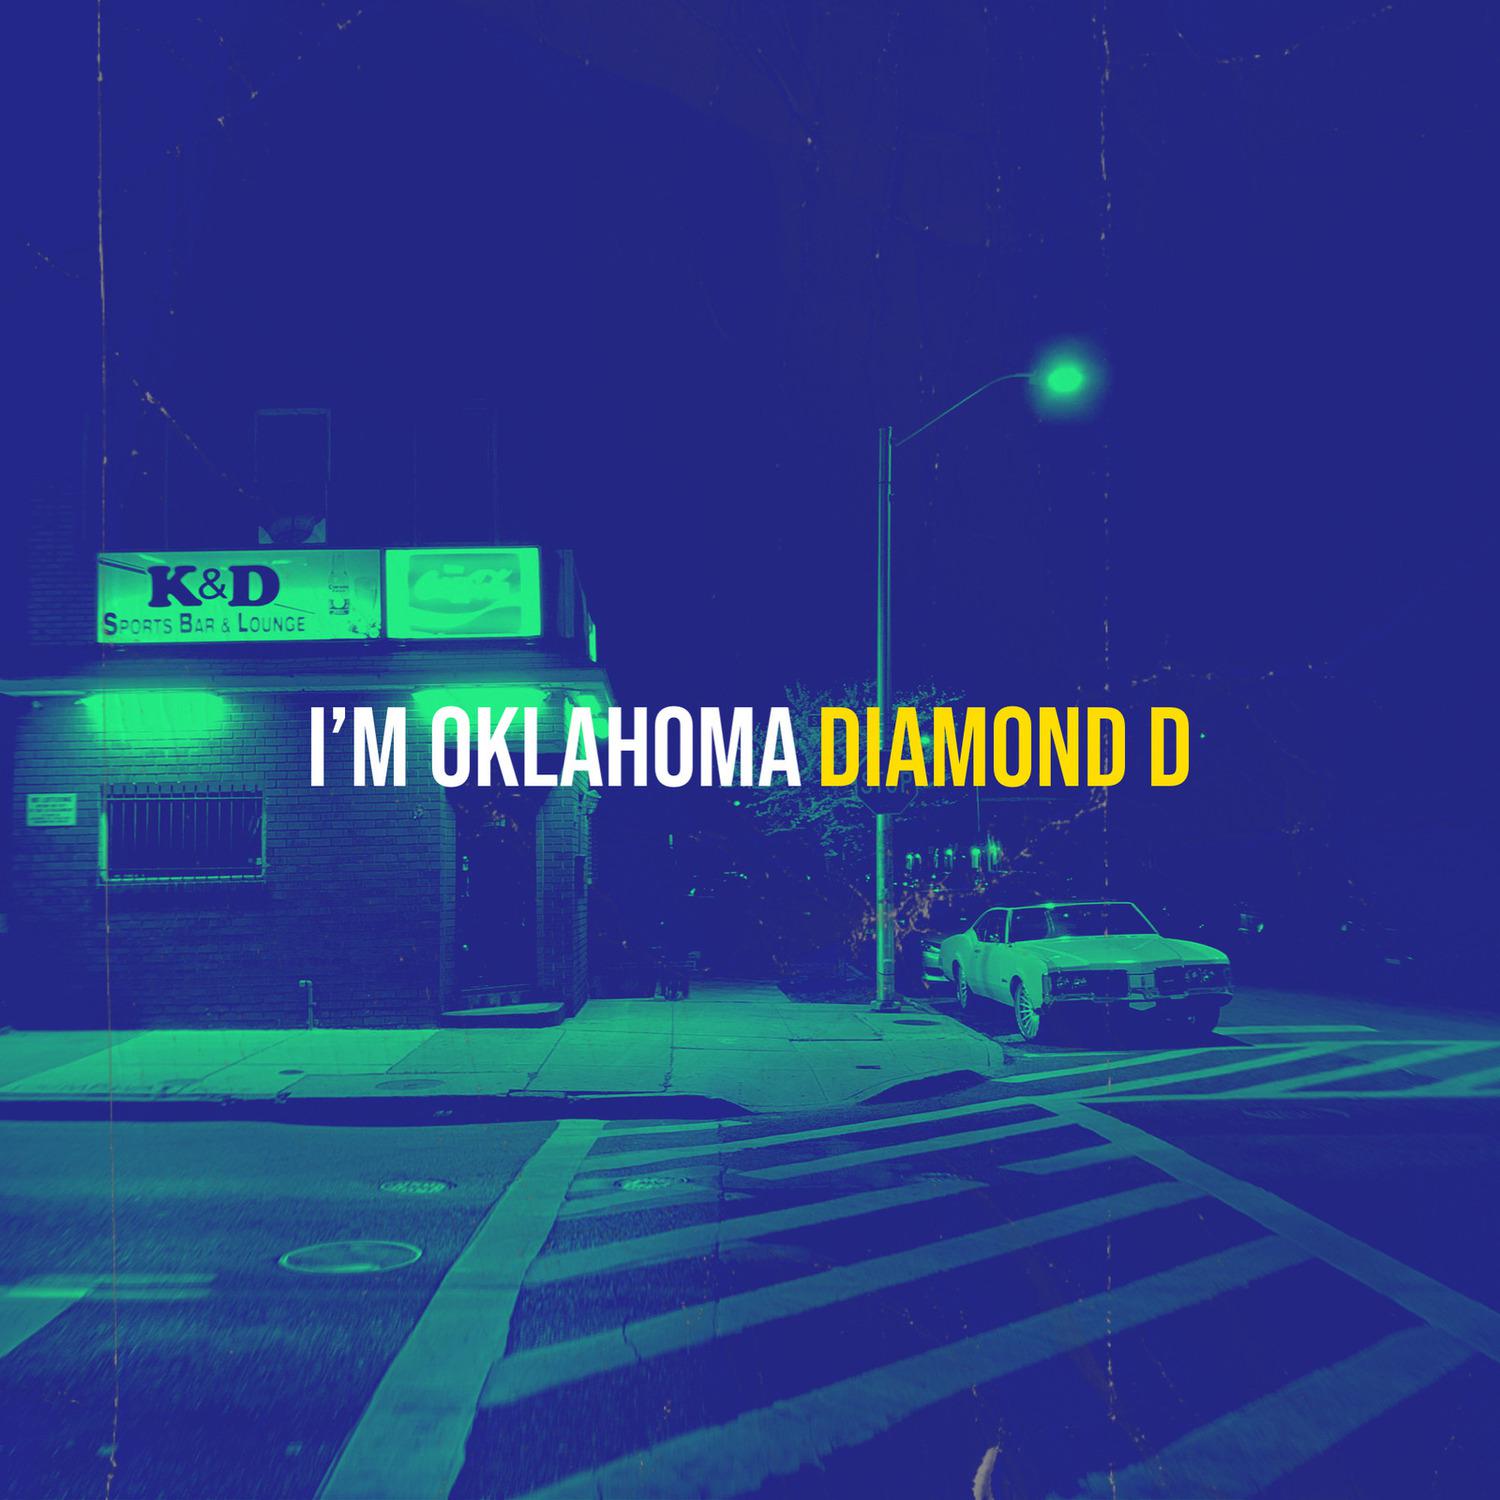 Oklahoma Diamond. Diamond d - Hatred, passions and Infidelity. M ok p